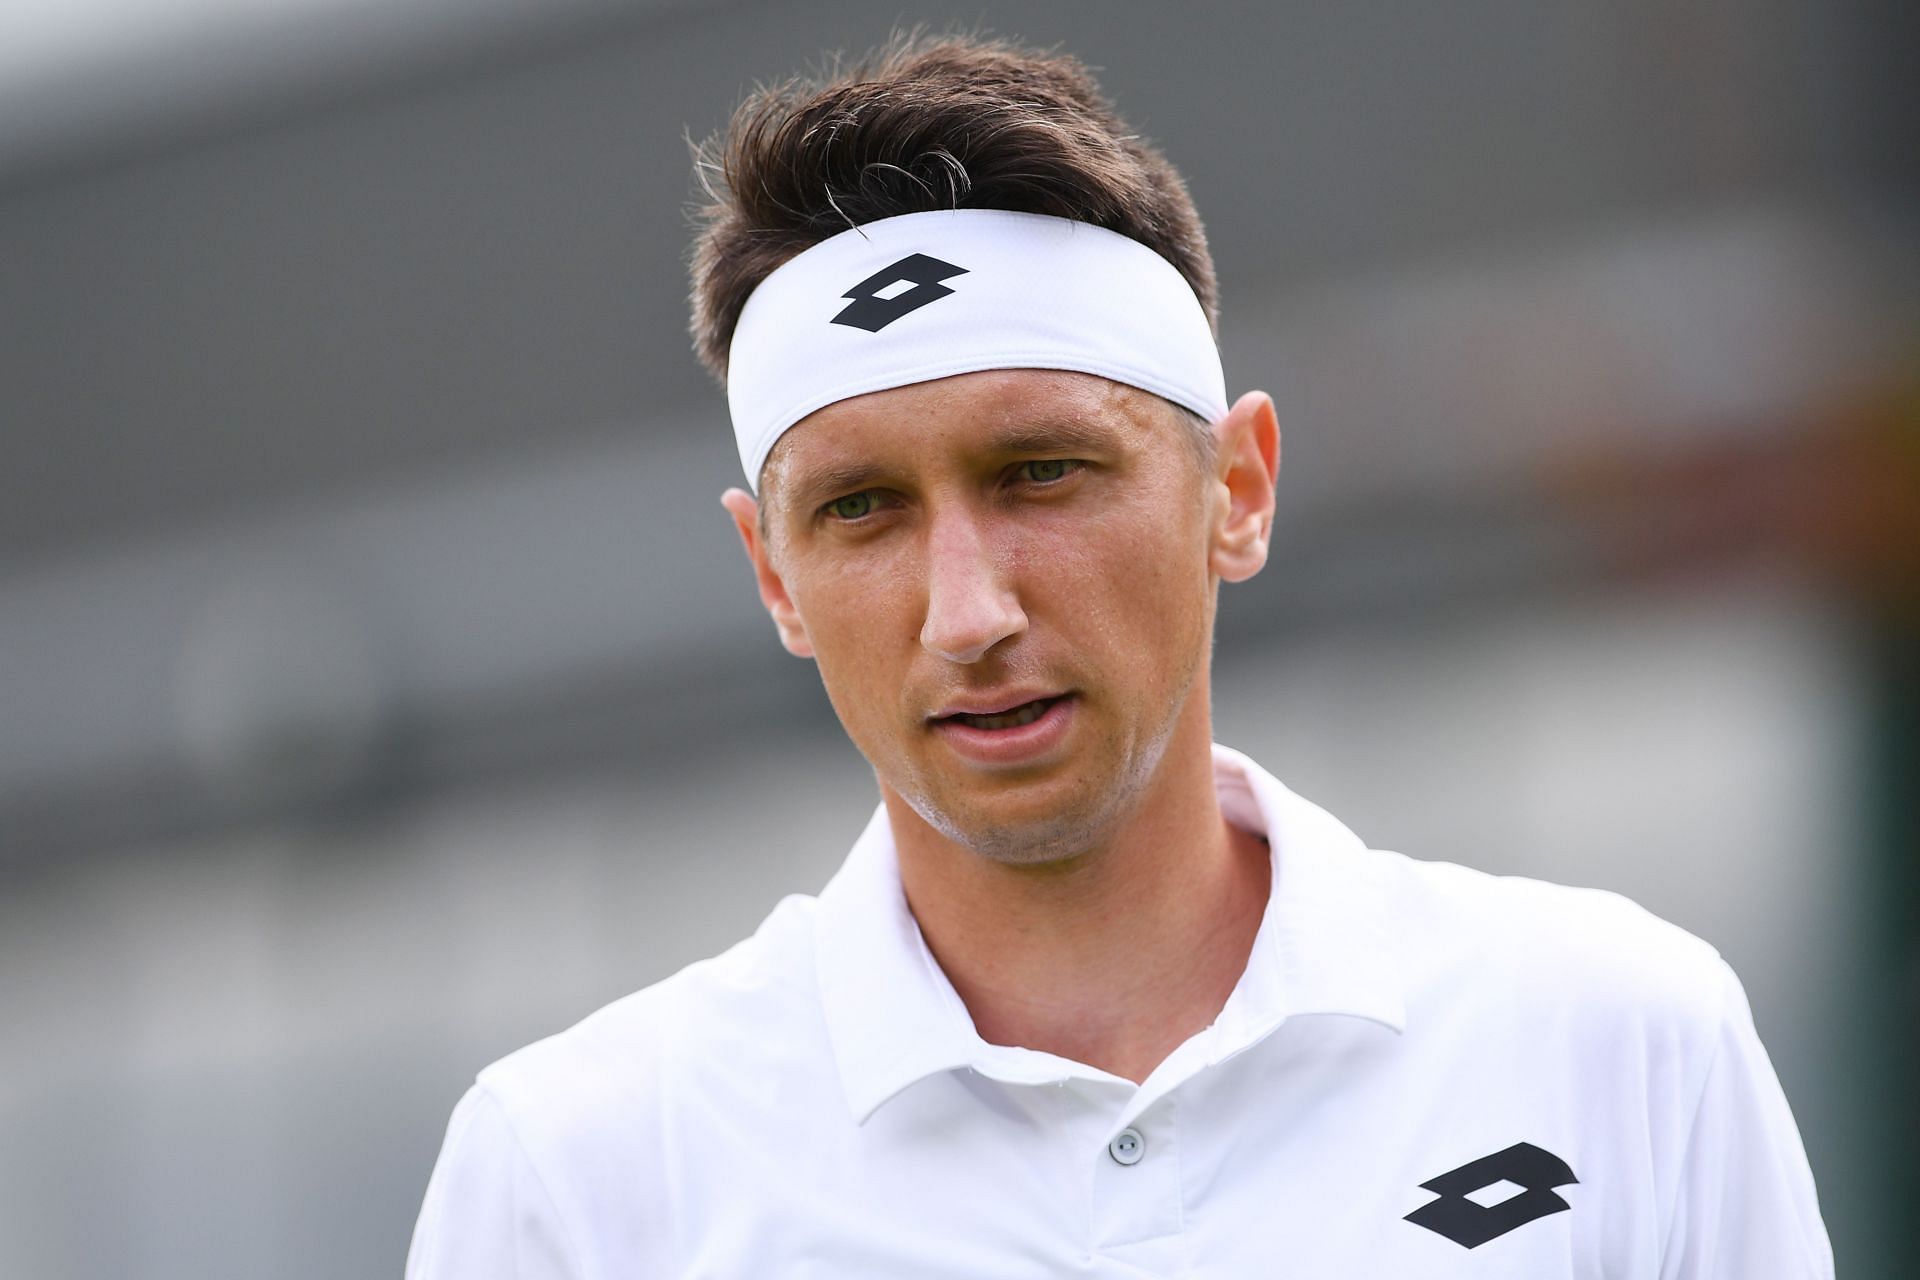 Sergiy Stakhovsky at the 2016 Wimbledon Championships.